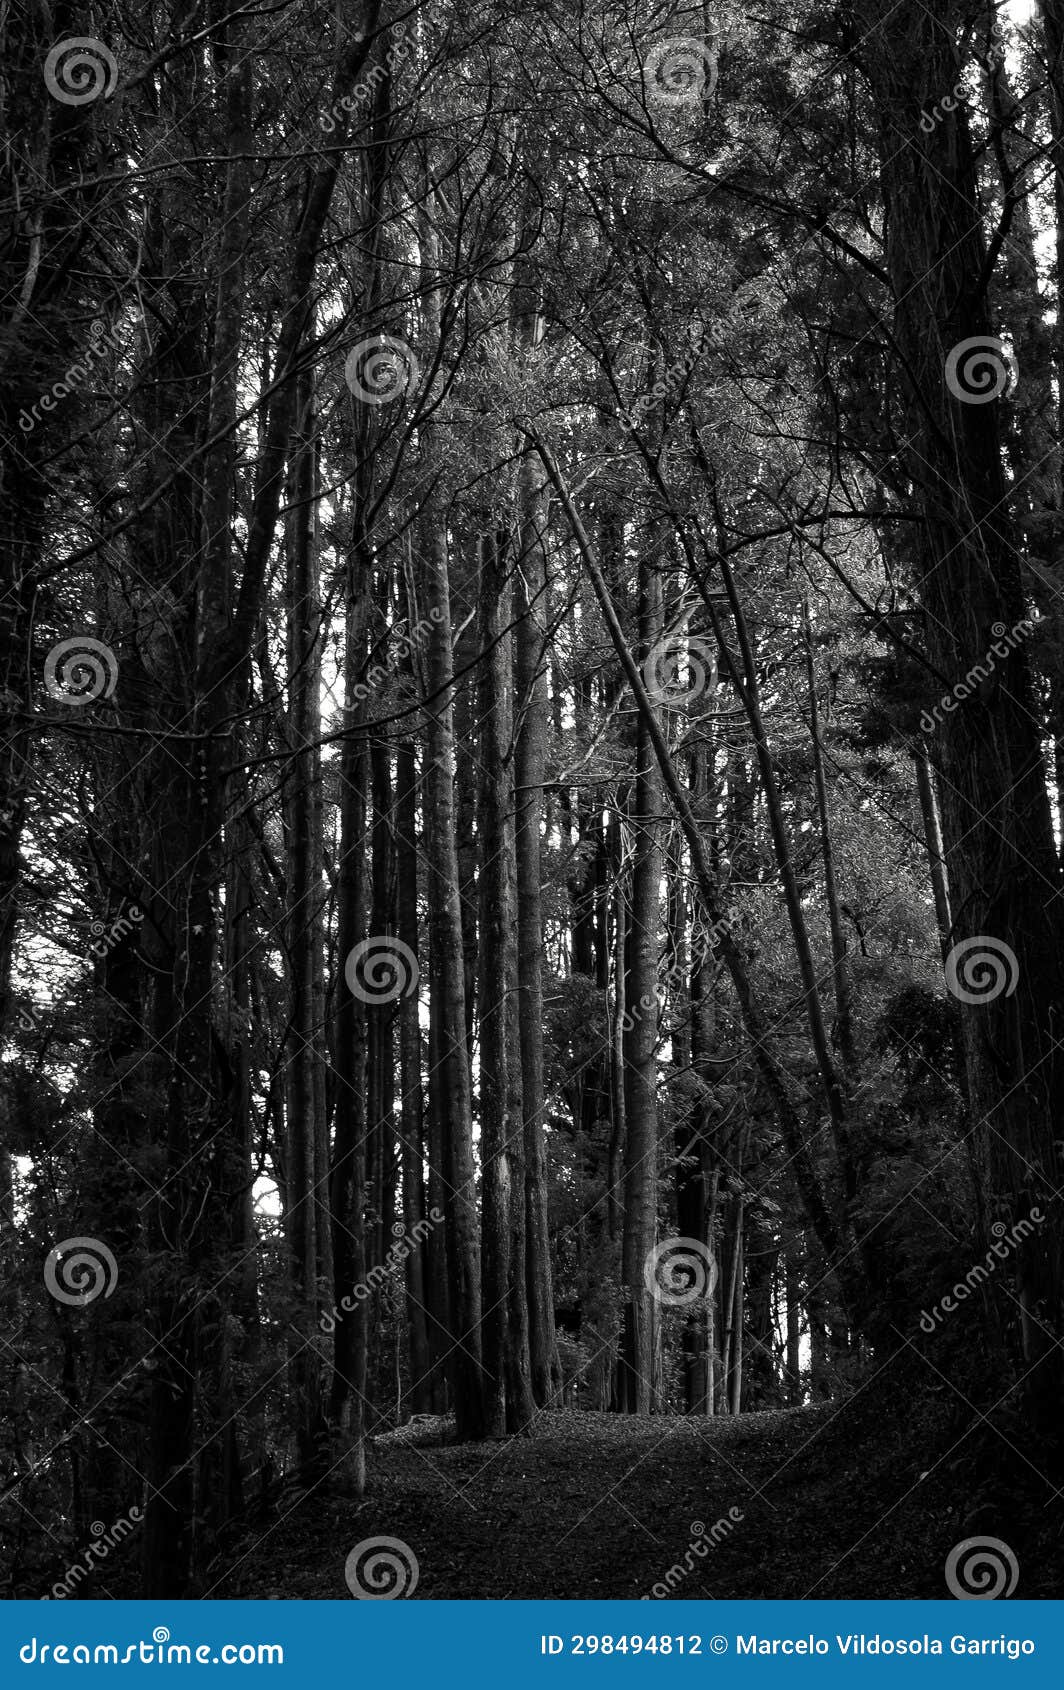 path between the trees of the forest of bernardo philippi park. puerto varas. chili.